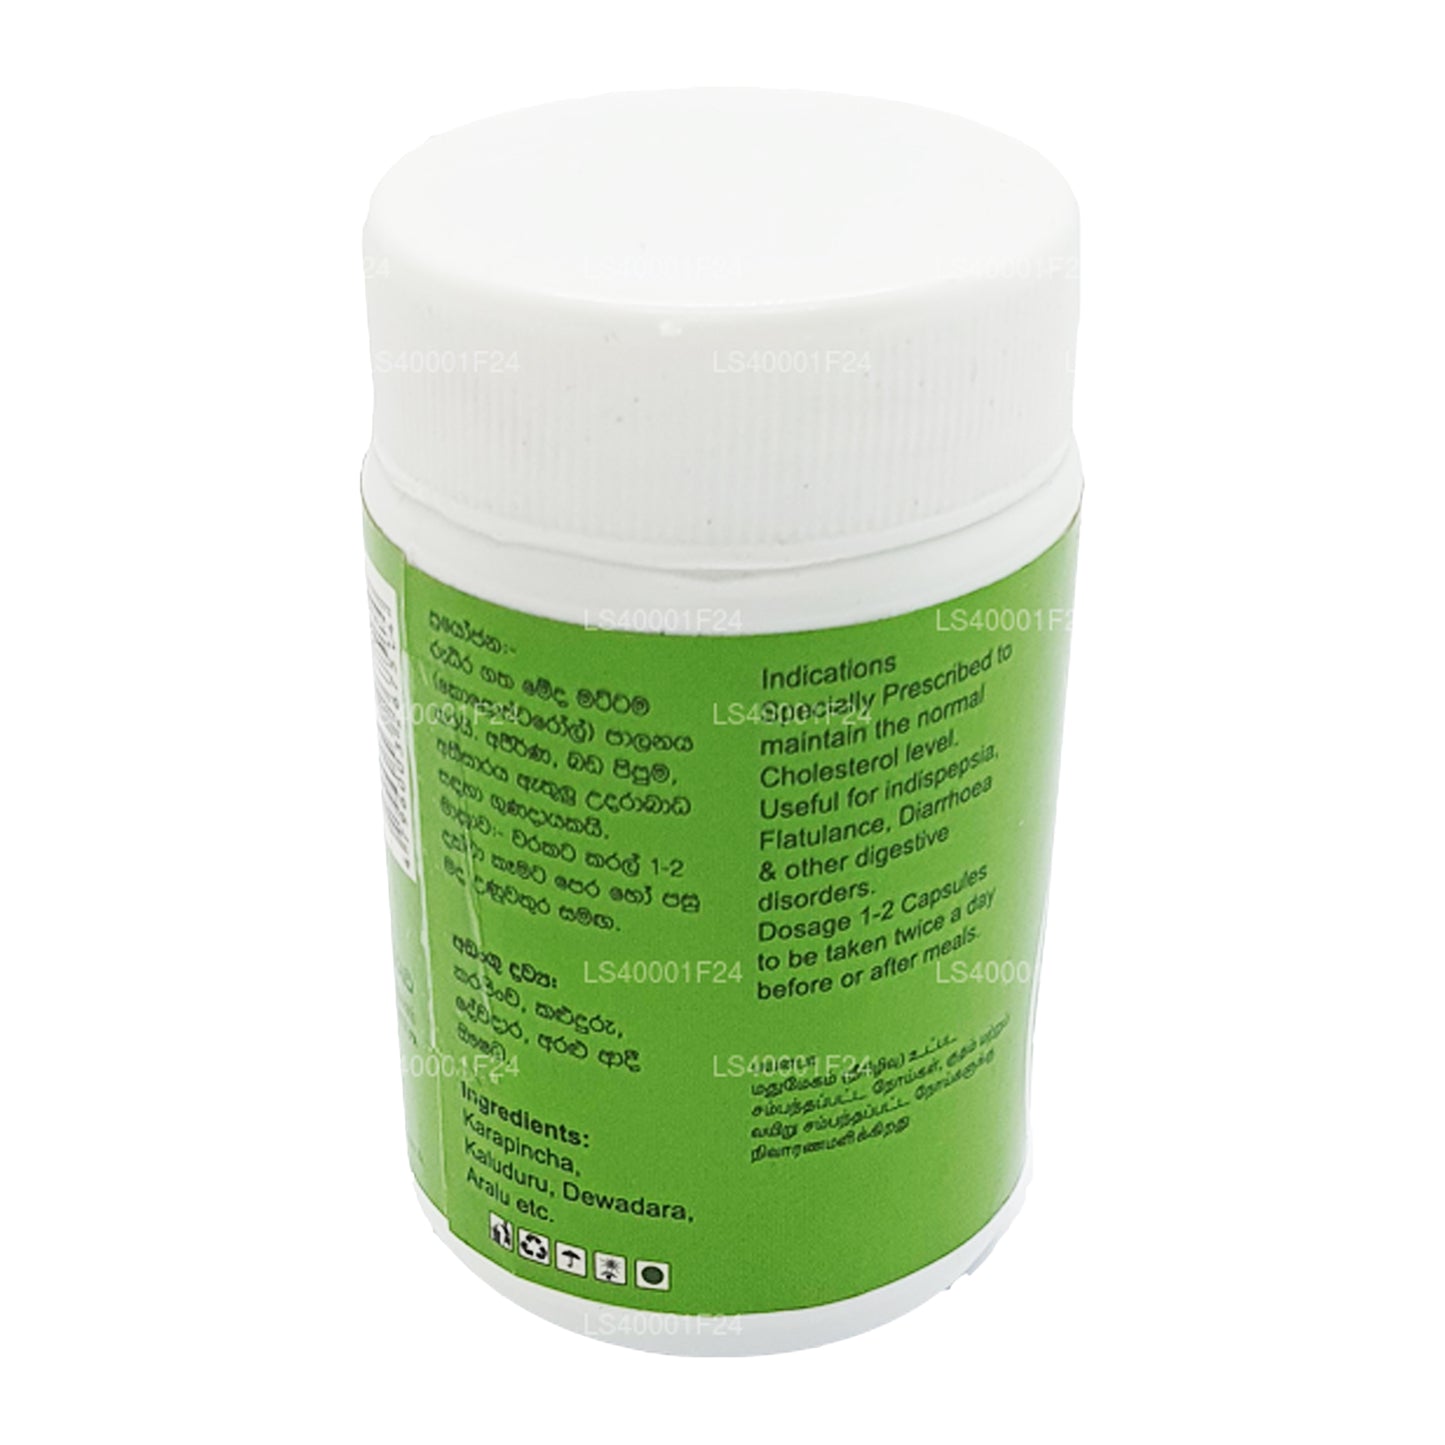 SLADC Meda Harani (500 mg x 60 gélules)